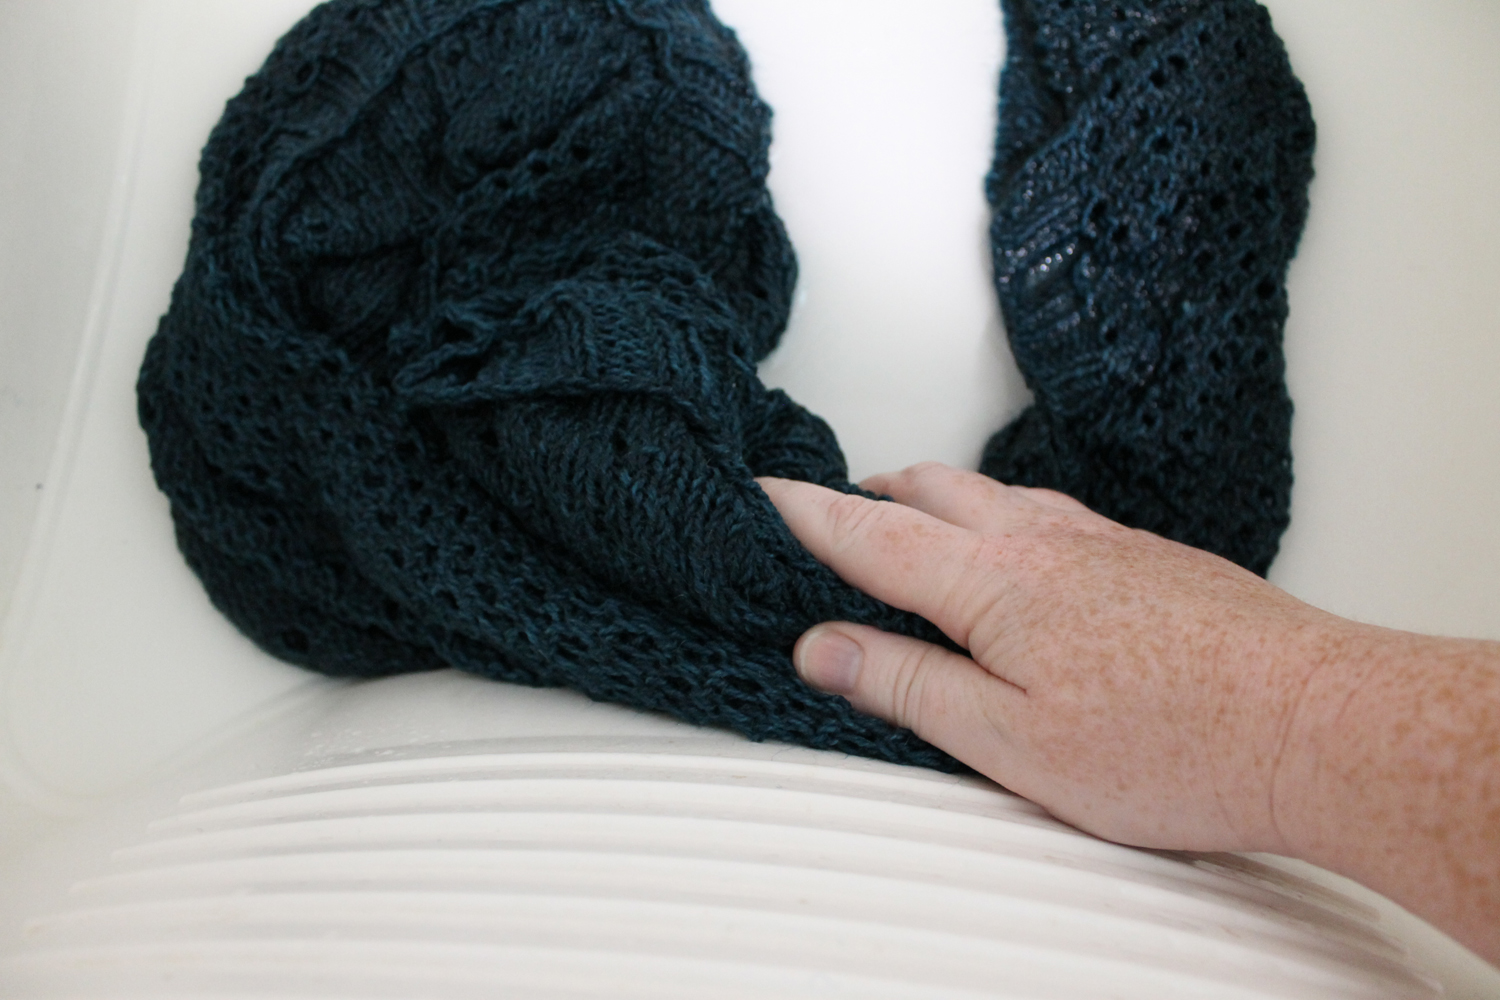 Washing a knit shawl